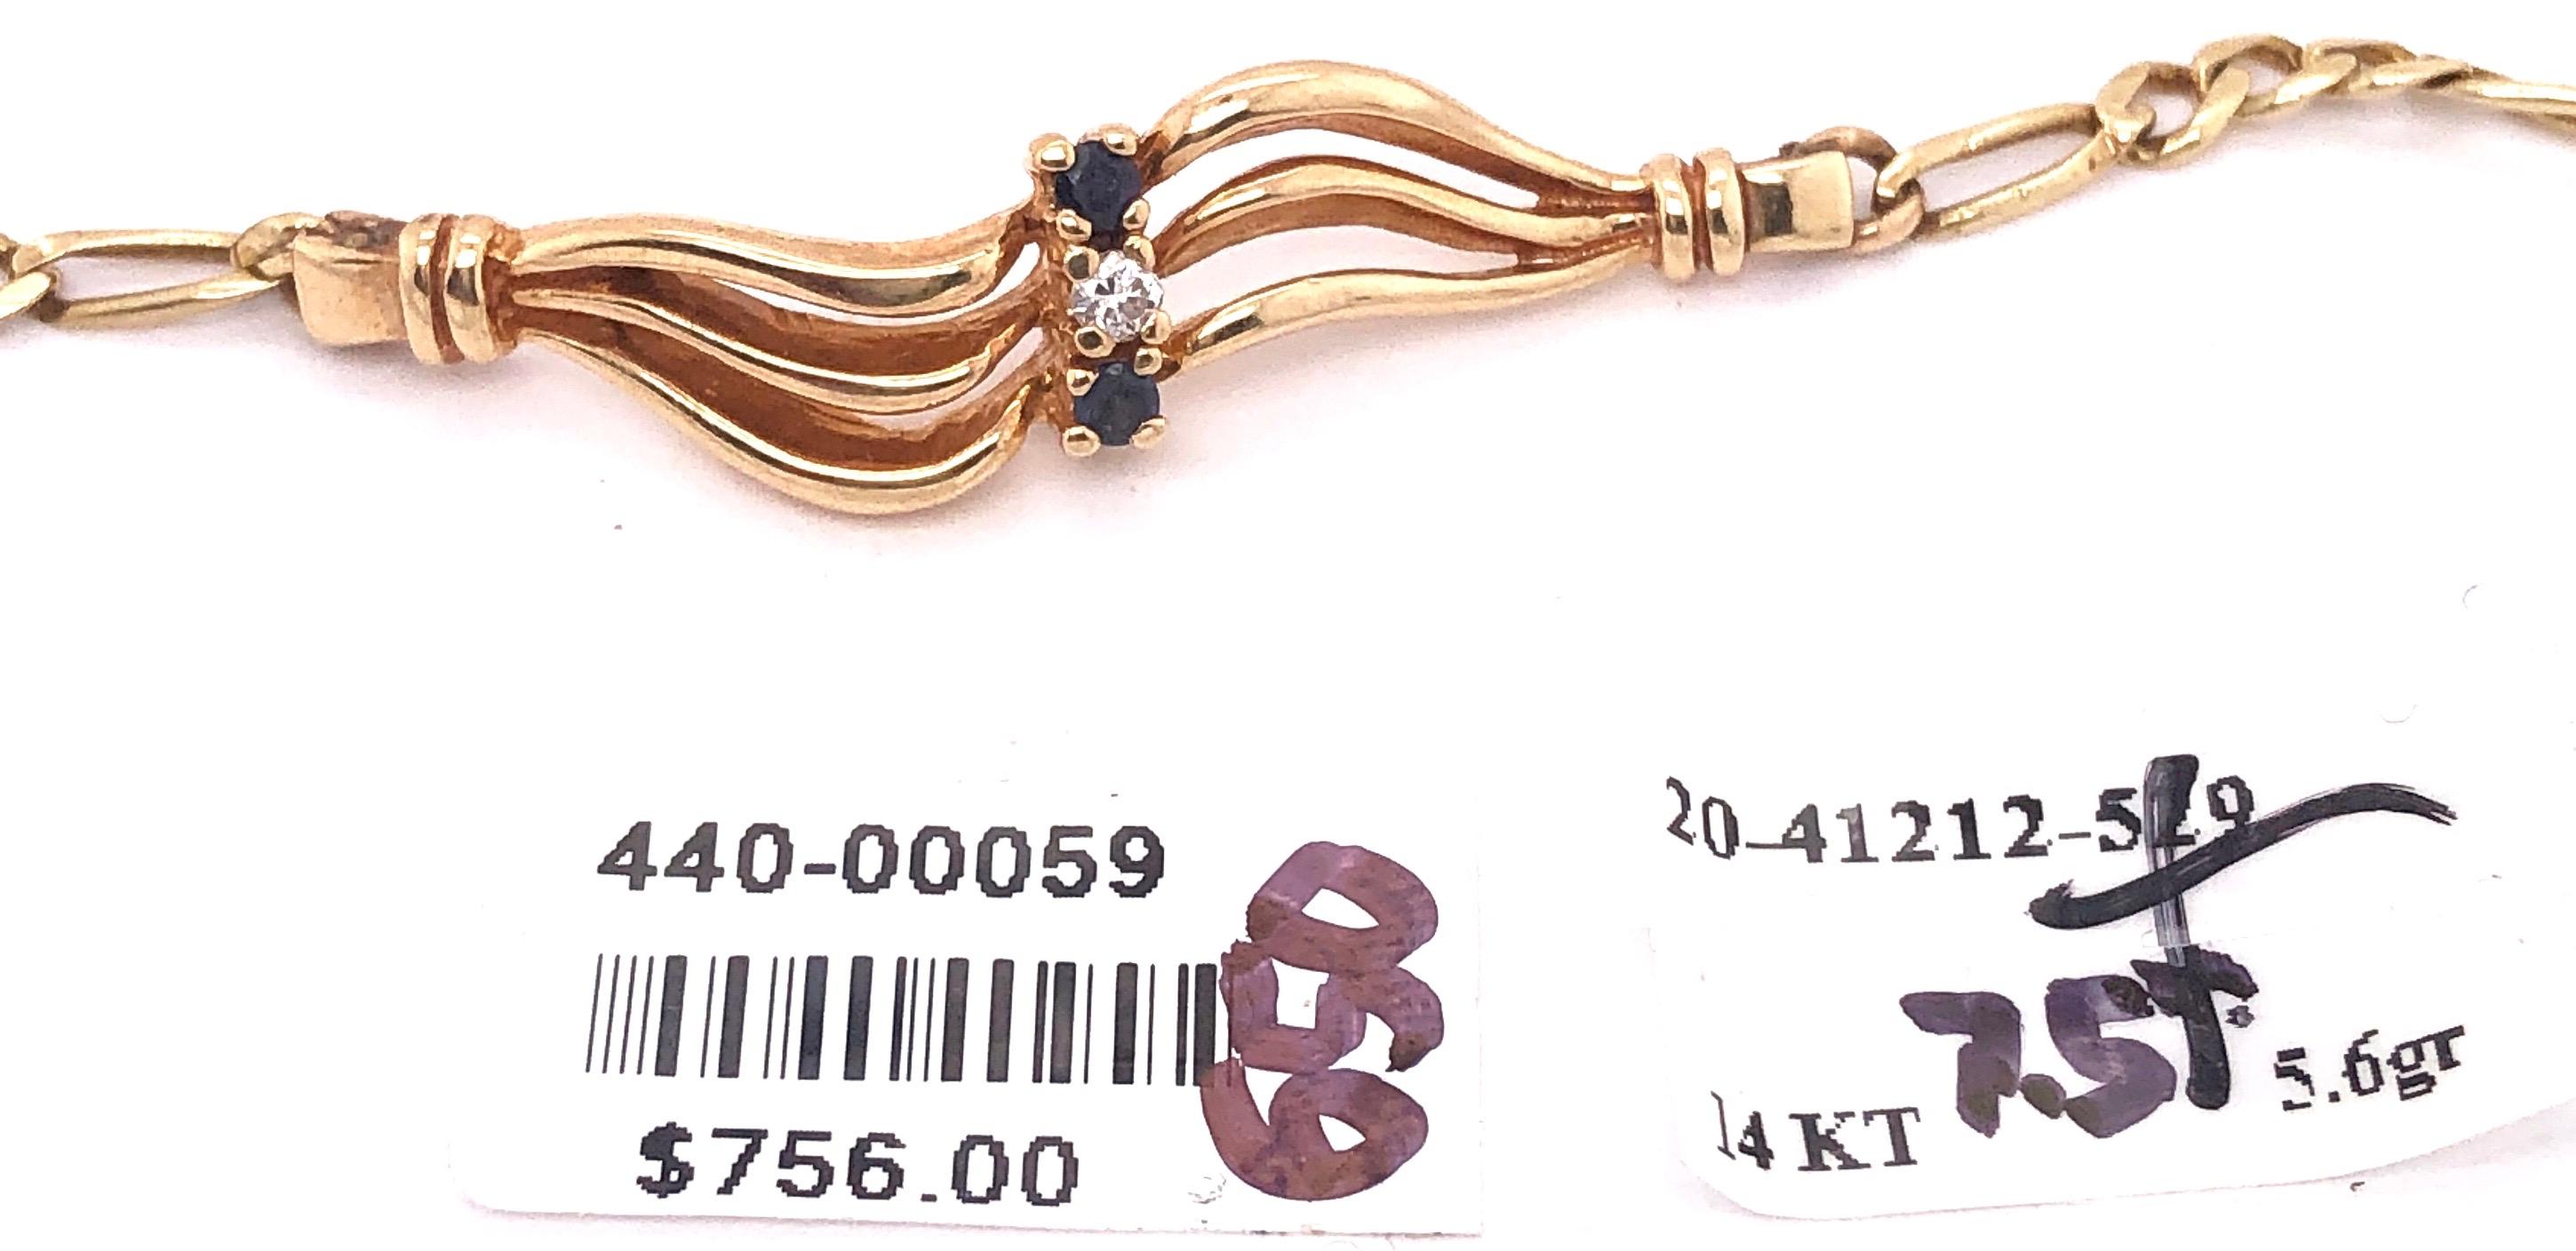 Women's or Men's 14 Karat Yellow Gold Fancy Bracelet with Semi Precious Stones For Sale